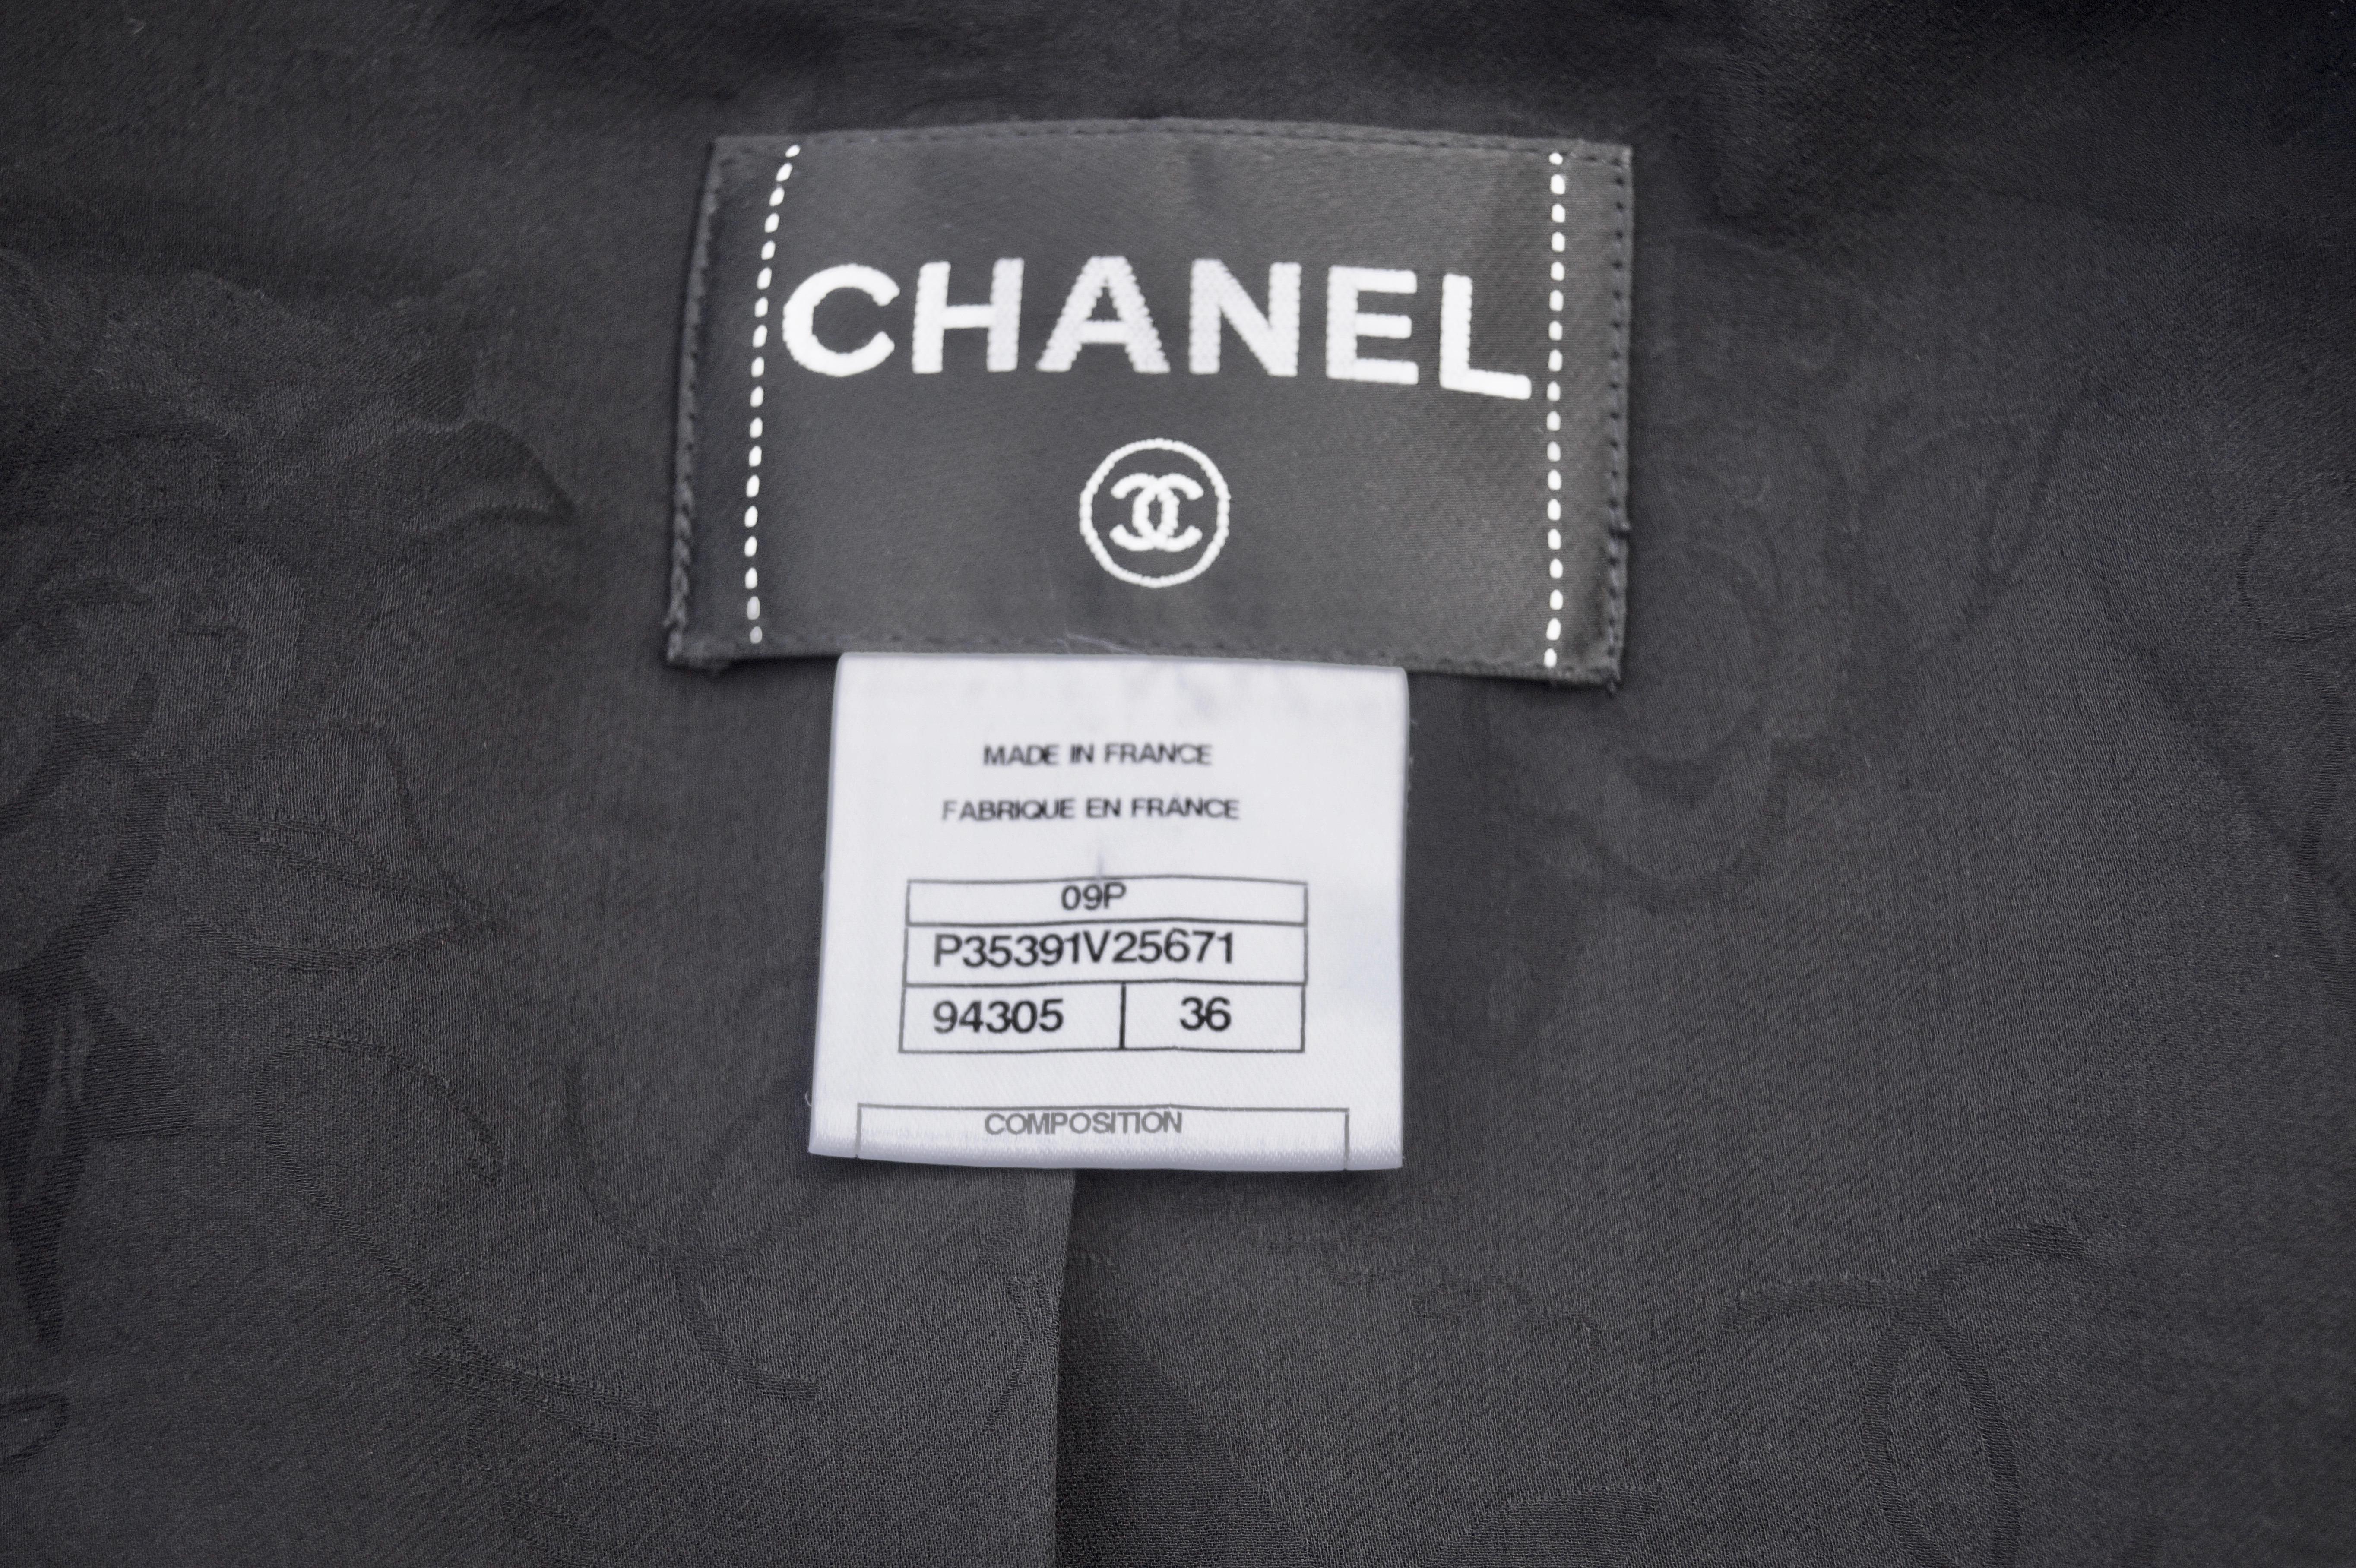 CHANEL  black bolero jacket FR 36 Spring 2009  09P For Sale 4